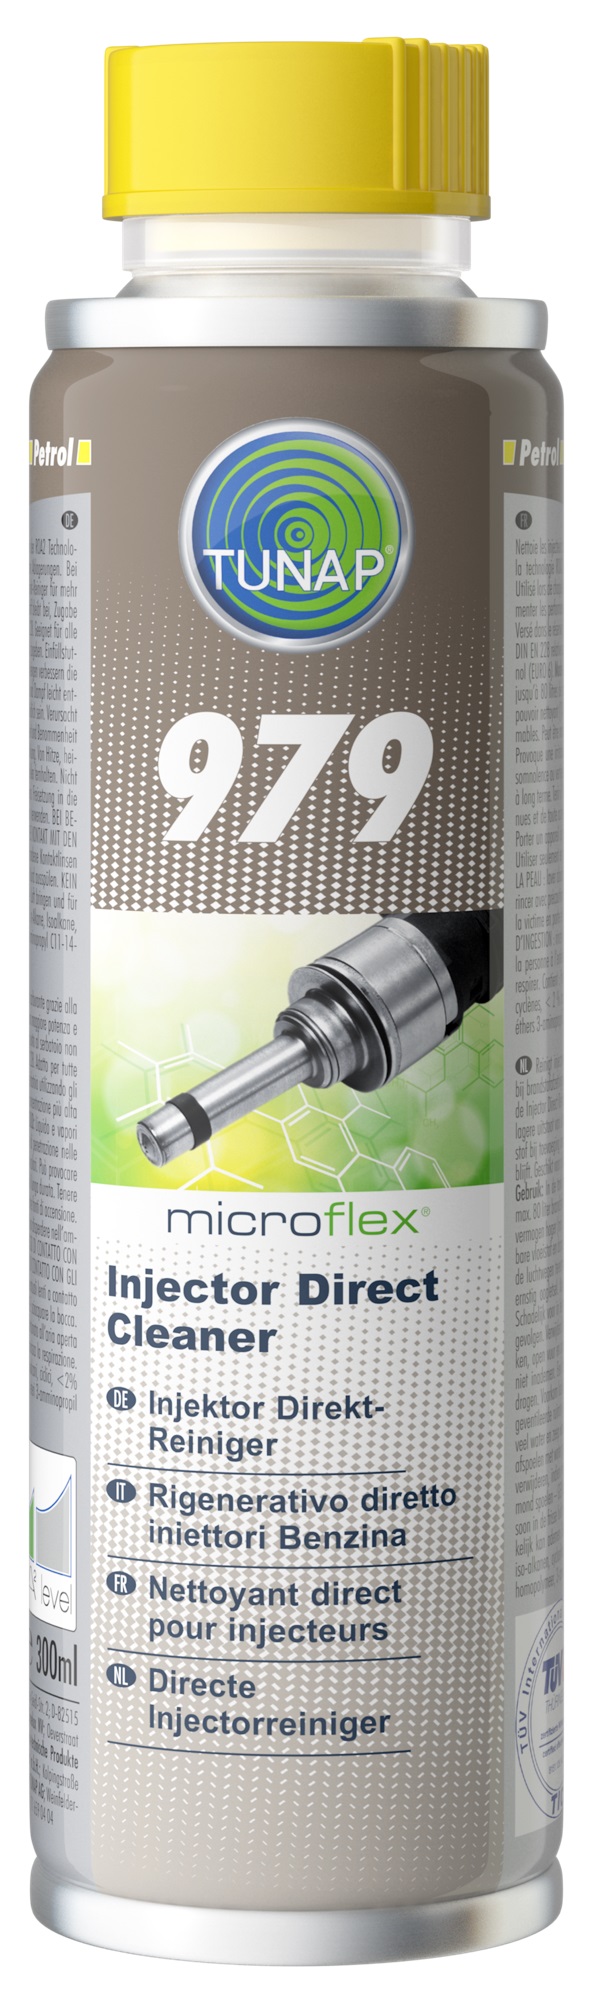 979 Injektor Direkt-Reiniger